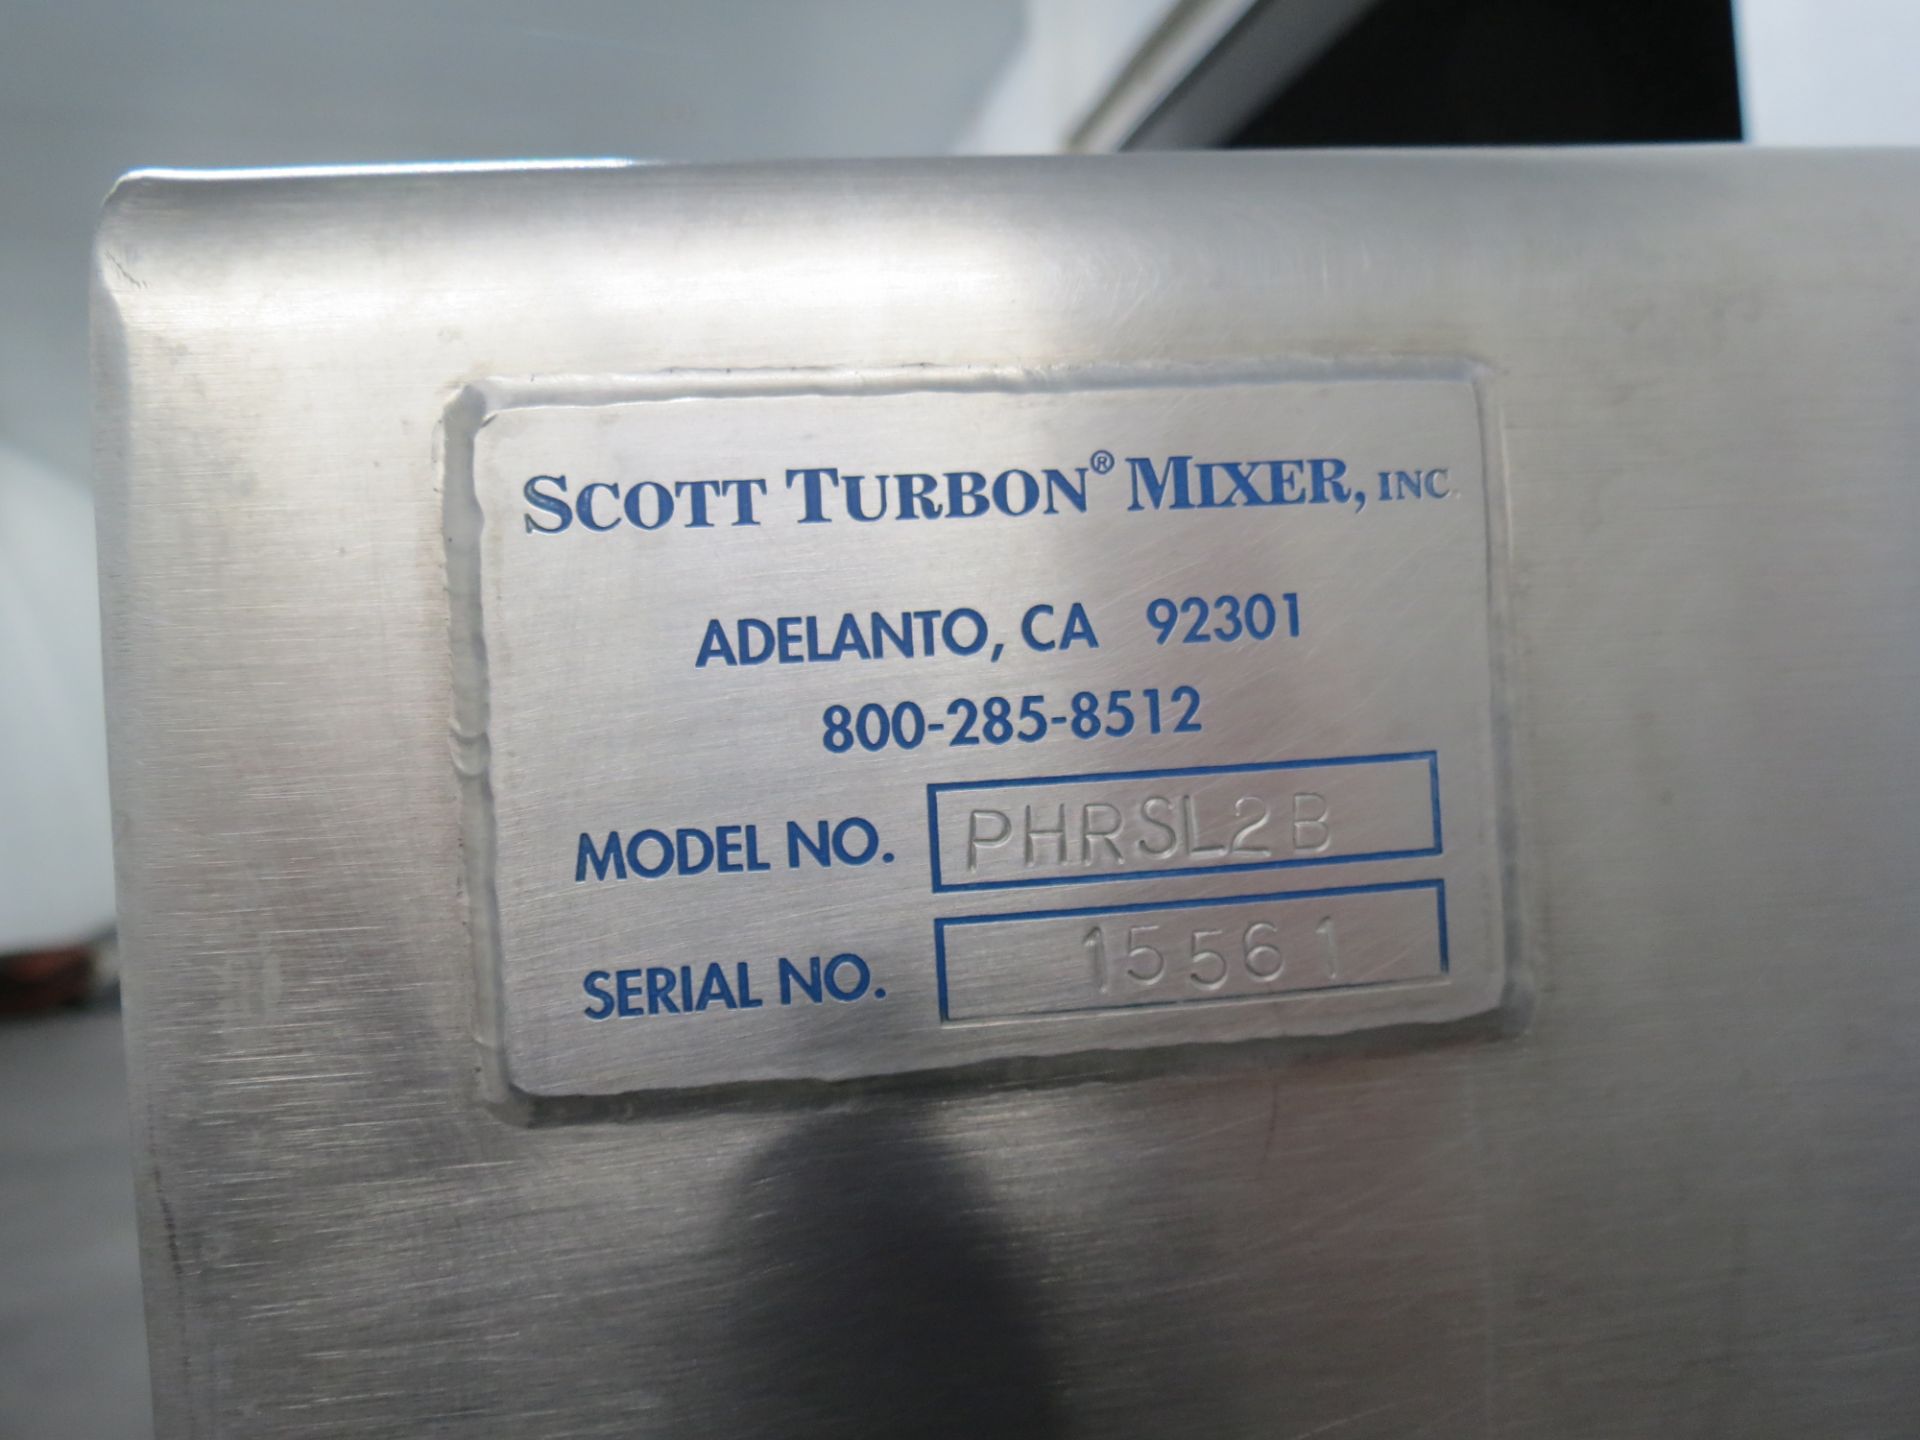 Scott Turbon Mixer Model PHRSL2B High Shear Mixer with 100 Gallon Stainless Steel Tank SN: 15561 ( - Image 2 of 2